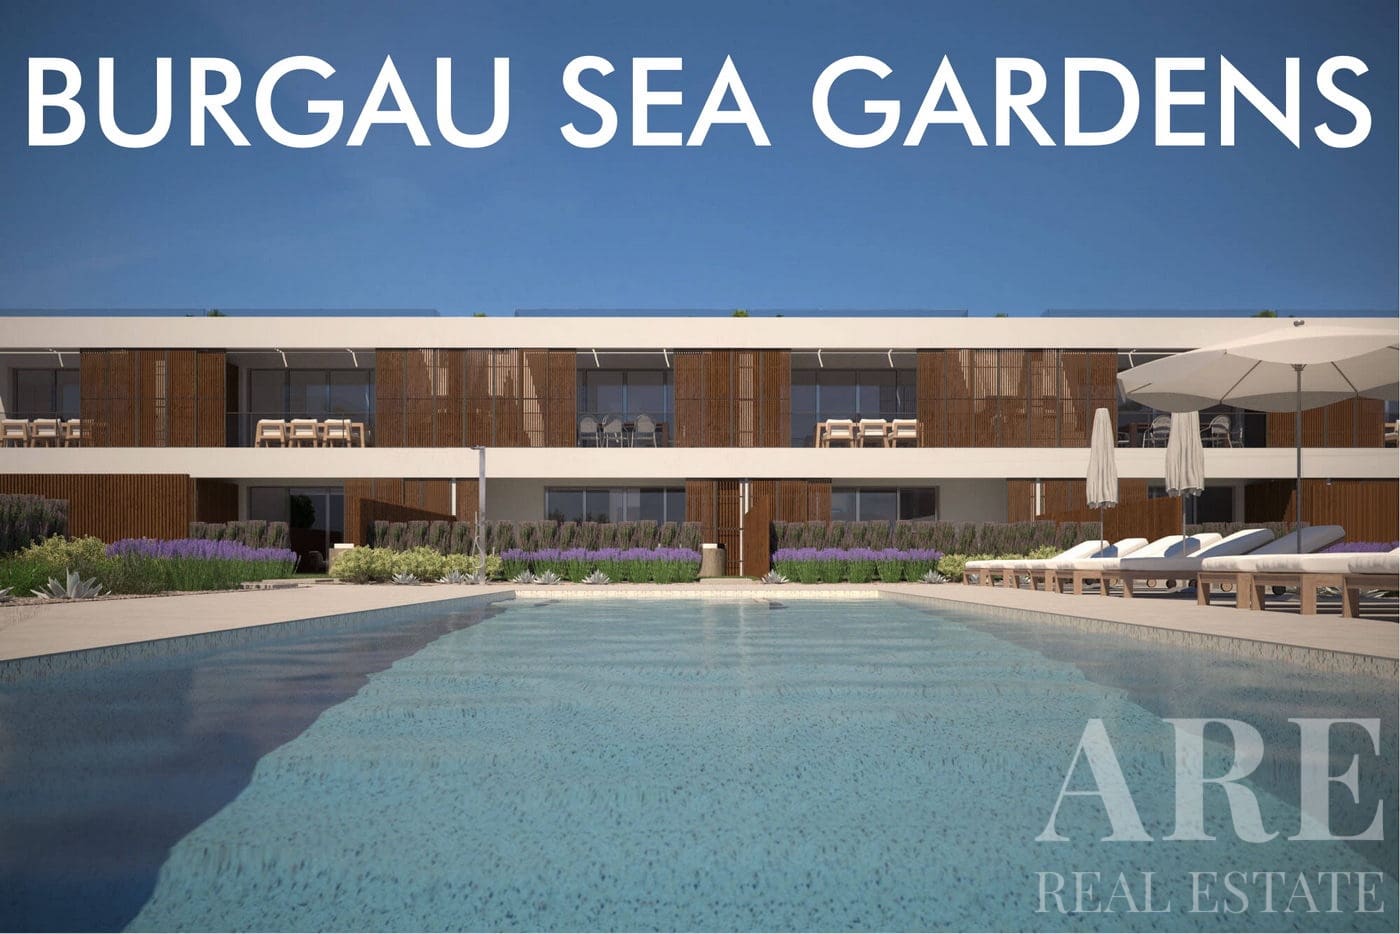 Burgau Sea Gardens condominium presentation